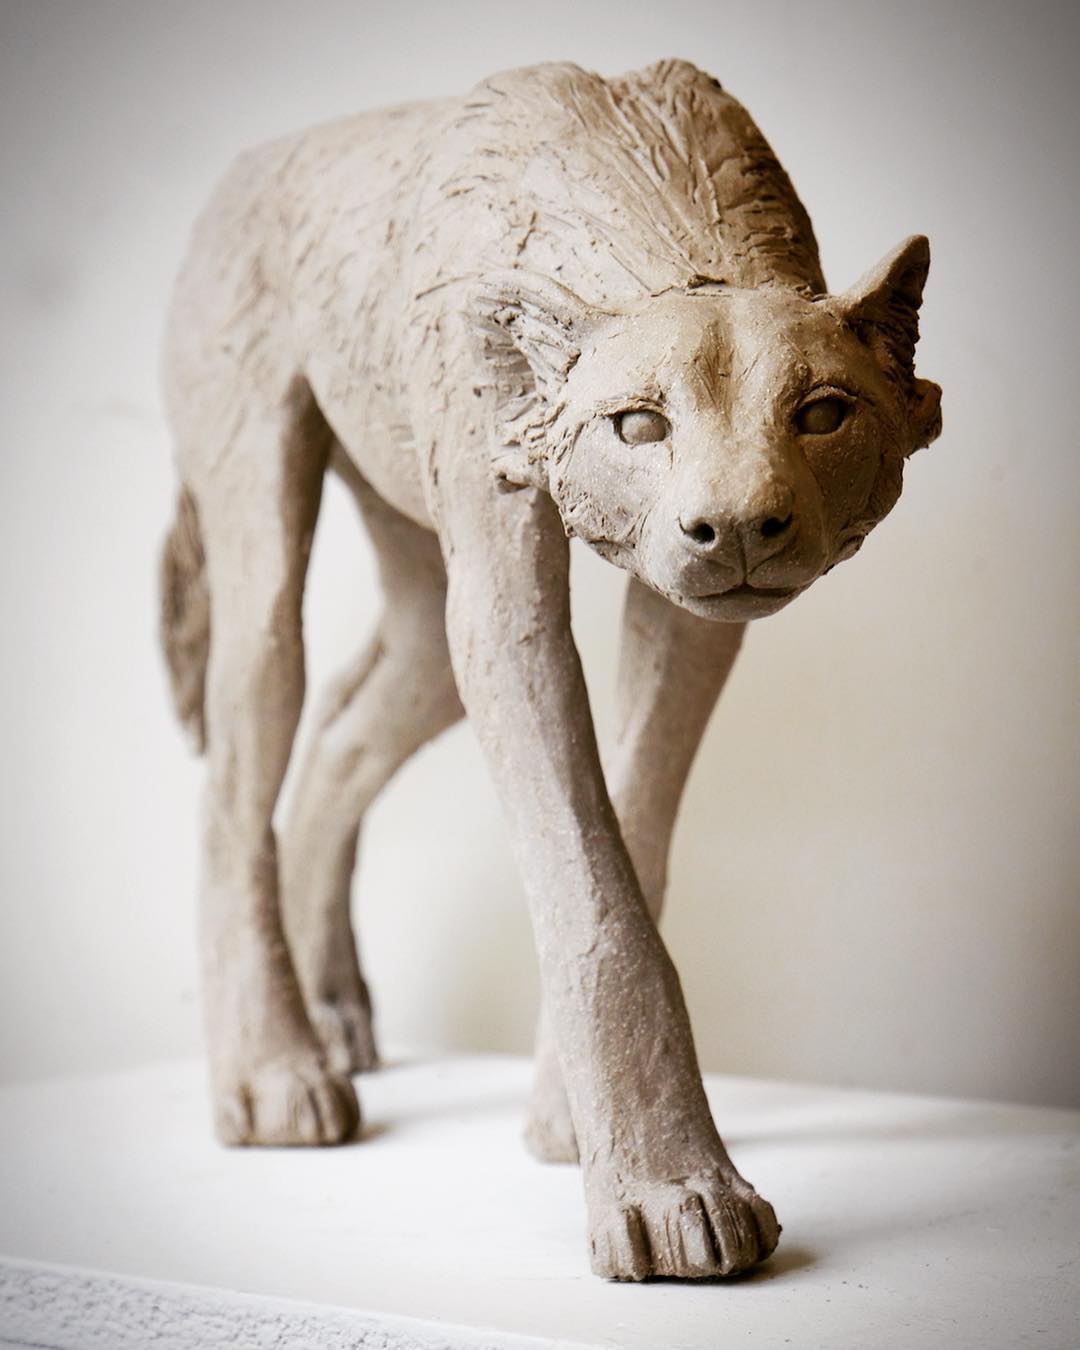 Nick Mackman sculpture – Wild dog sculpture